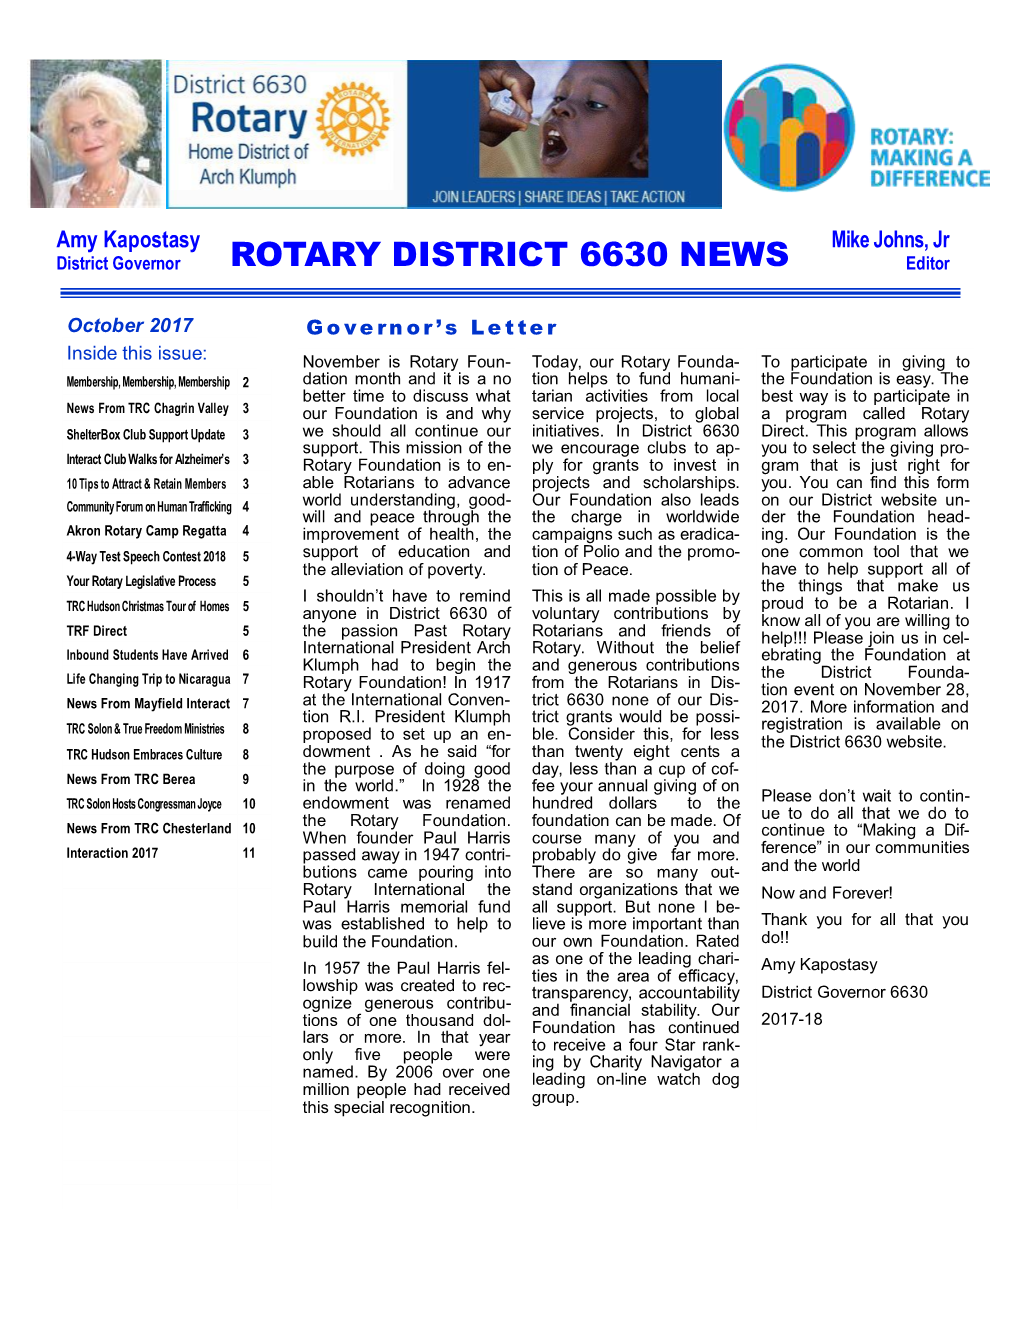 ROTARY DISTRICT 6630 NEWS Editor